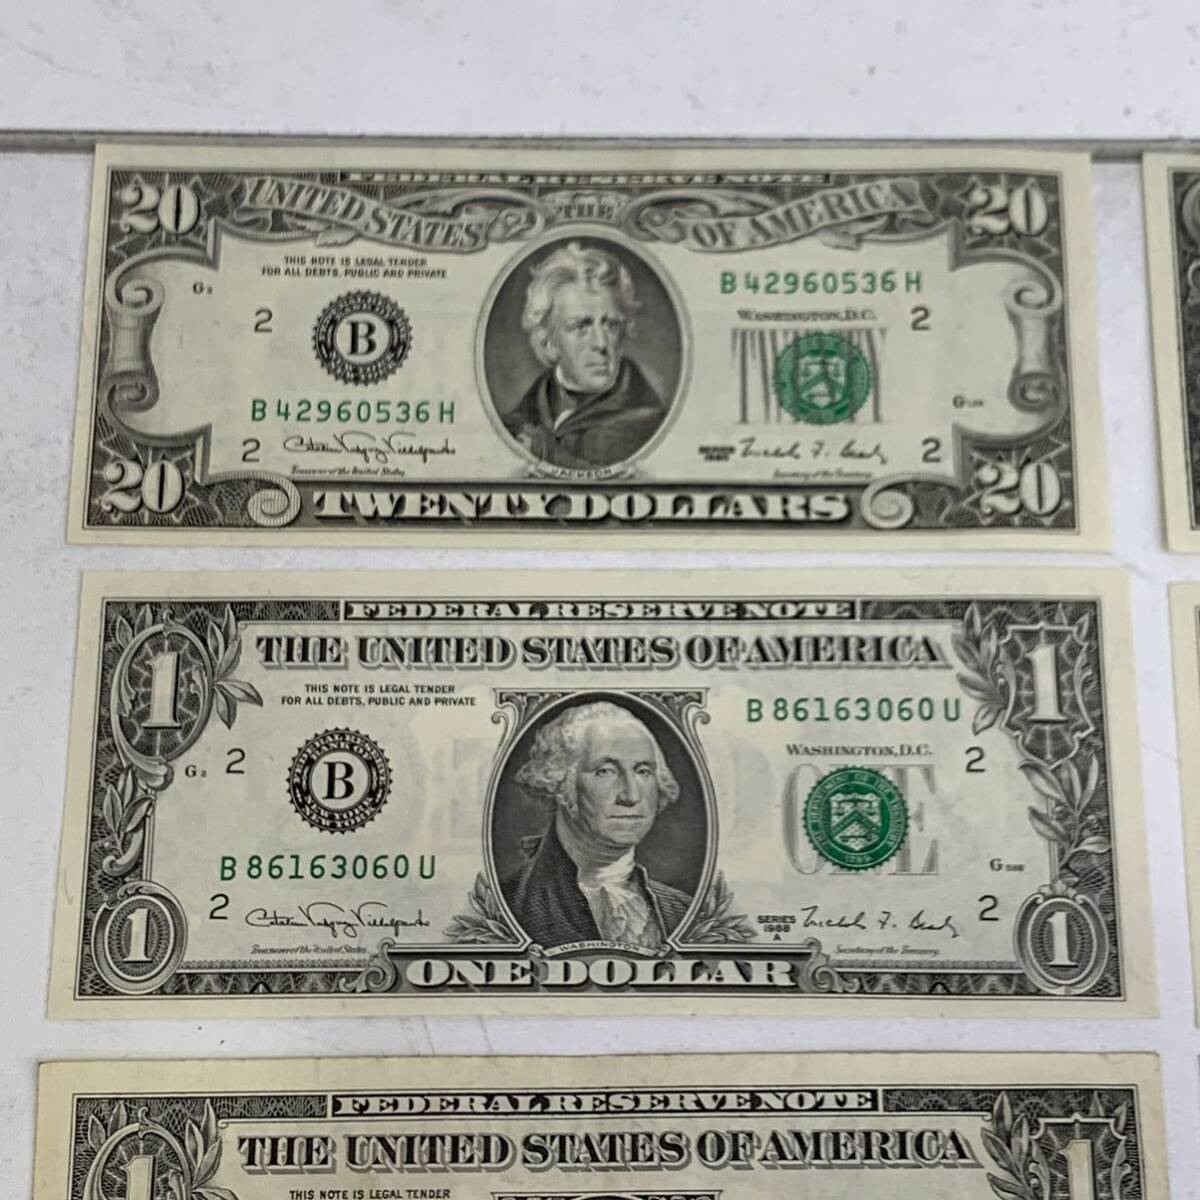 【TC0406】アメリカドル 旧紙幣 合計34ドル まとめ 1ドル札×4枚 10ドル札×1枚 20ドル札×1枚 海外紙幣 外国紙幣 米国 コレクション_画像2